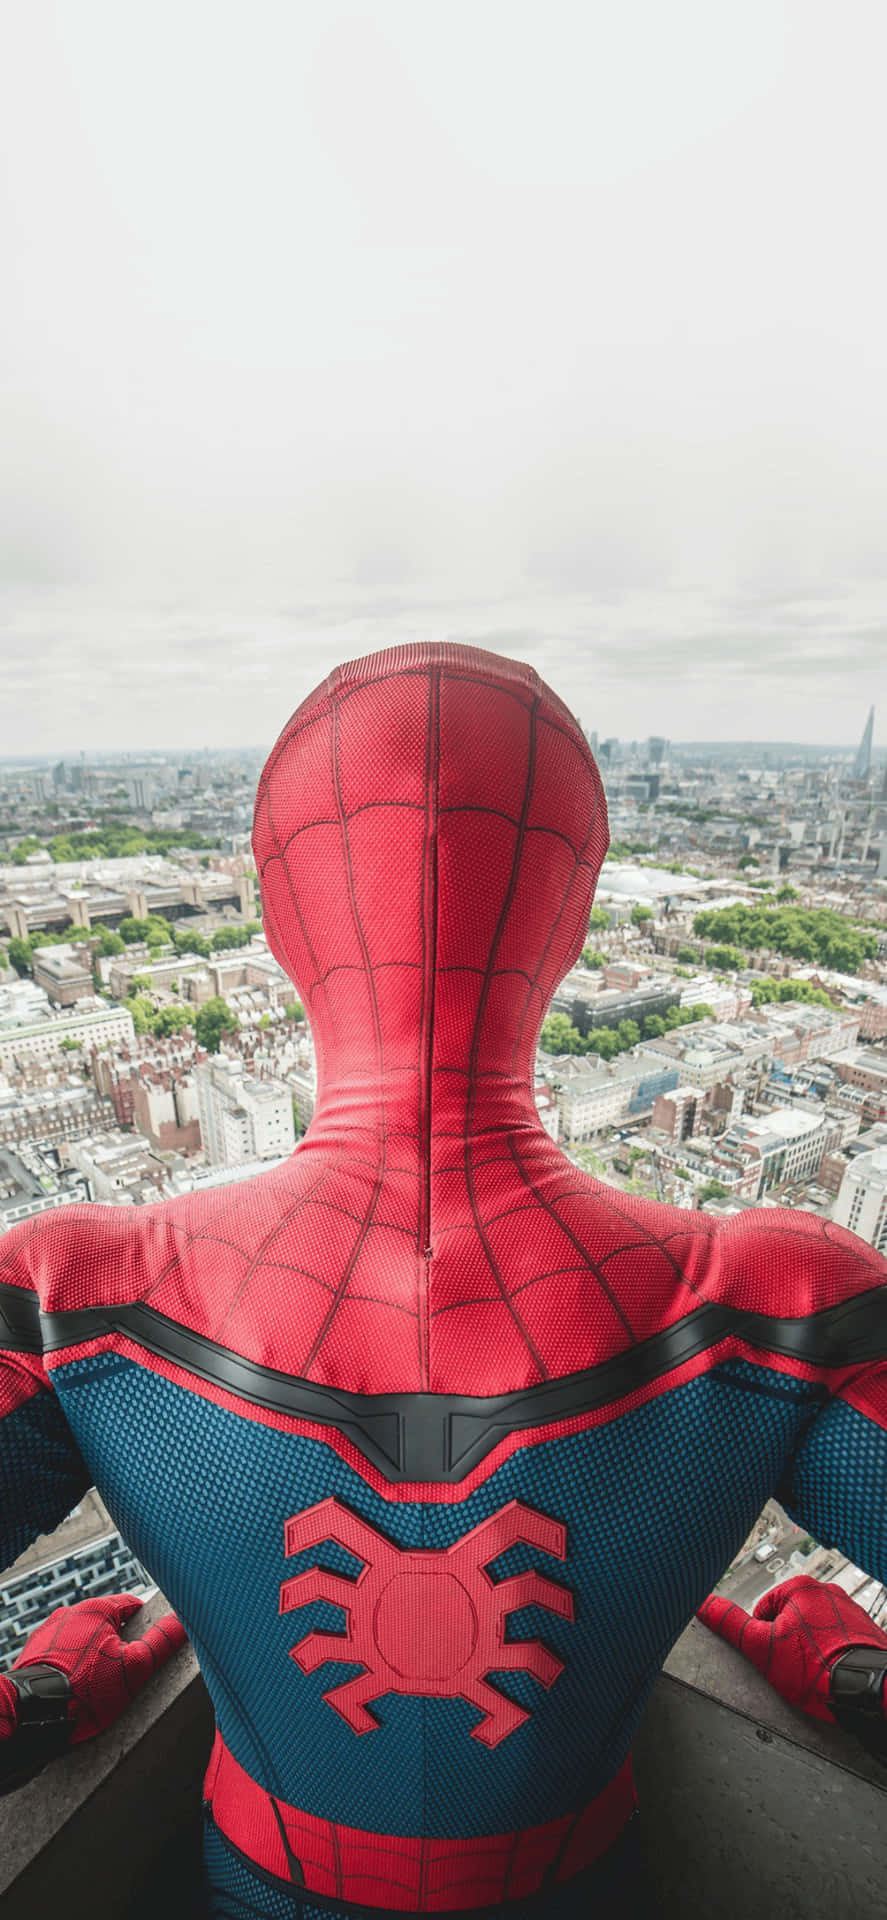 Iphonexs Max Marvel Spiderman Superhjälte Bakgrundsbild.